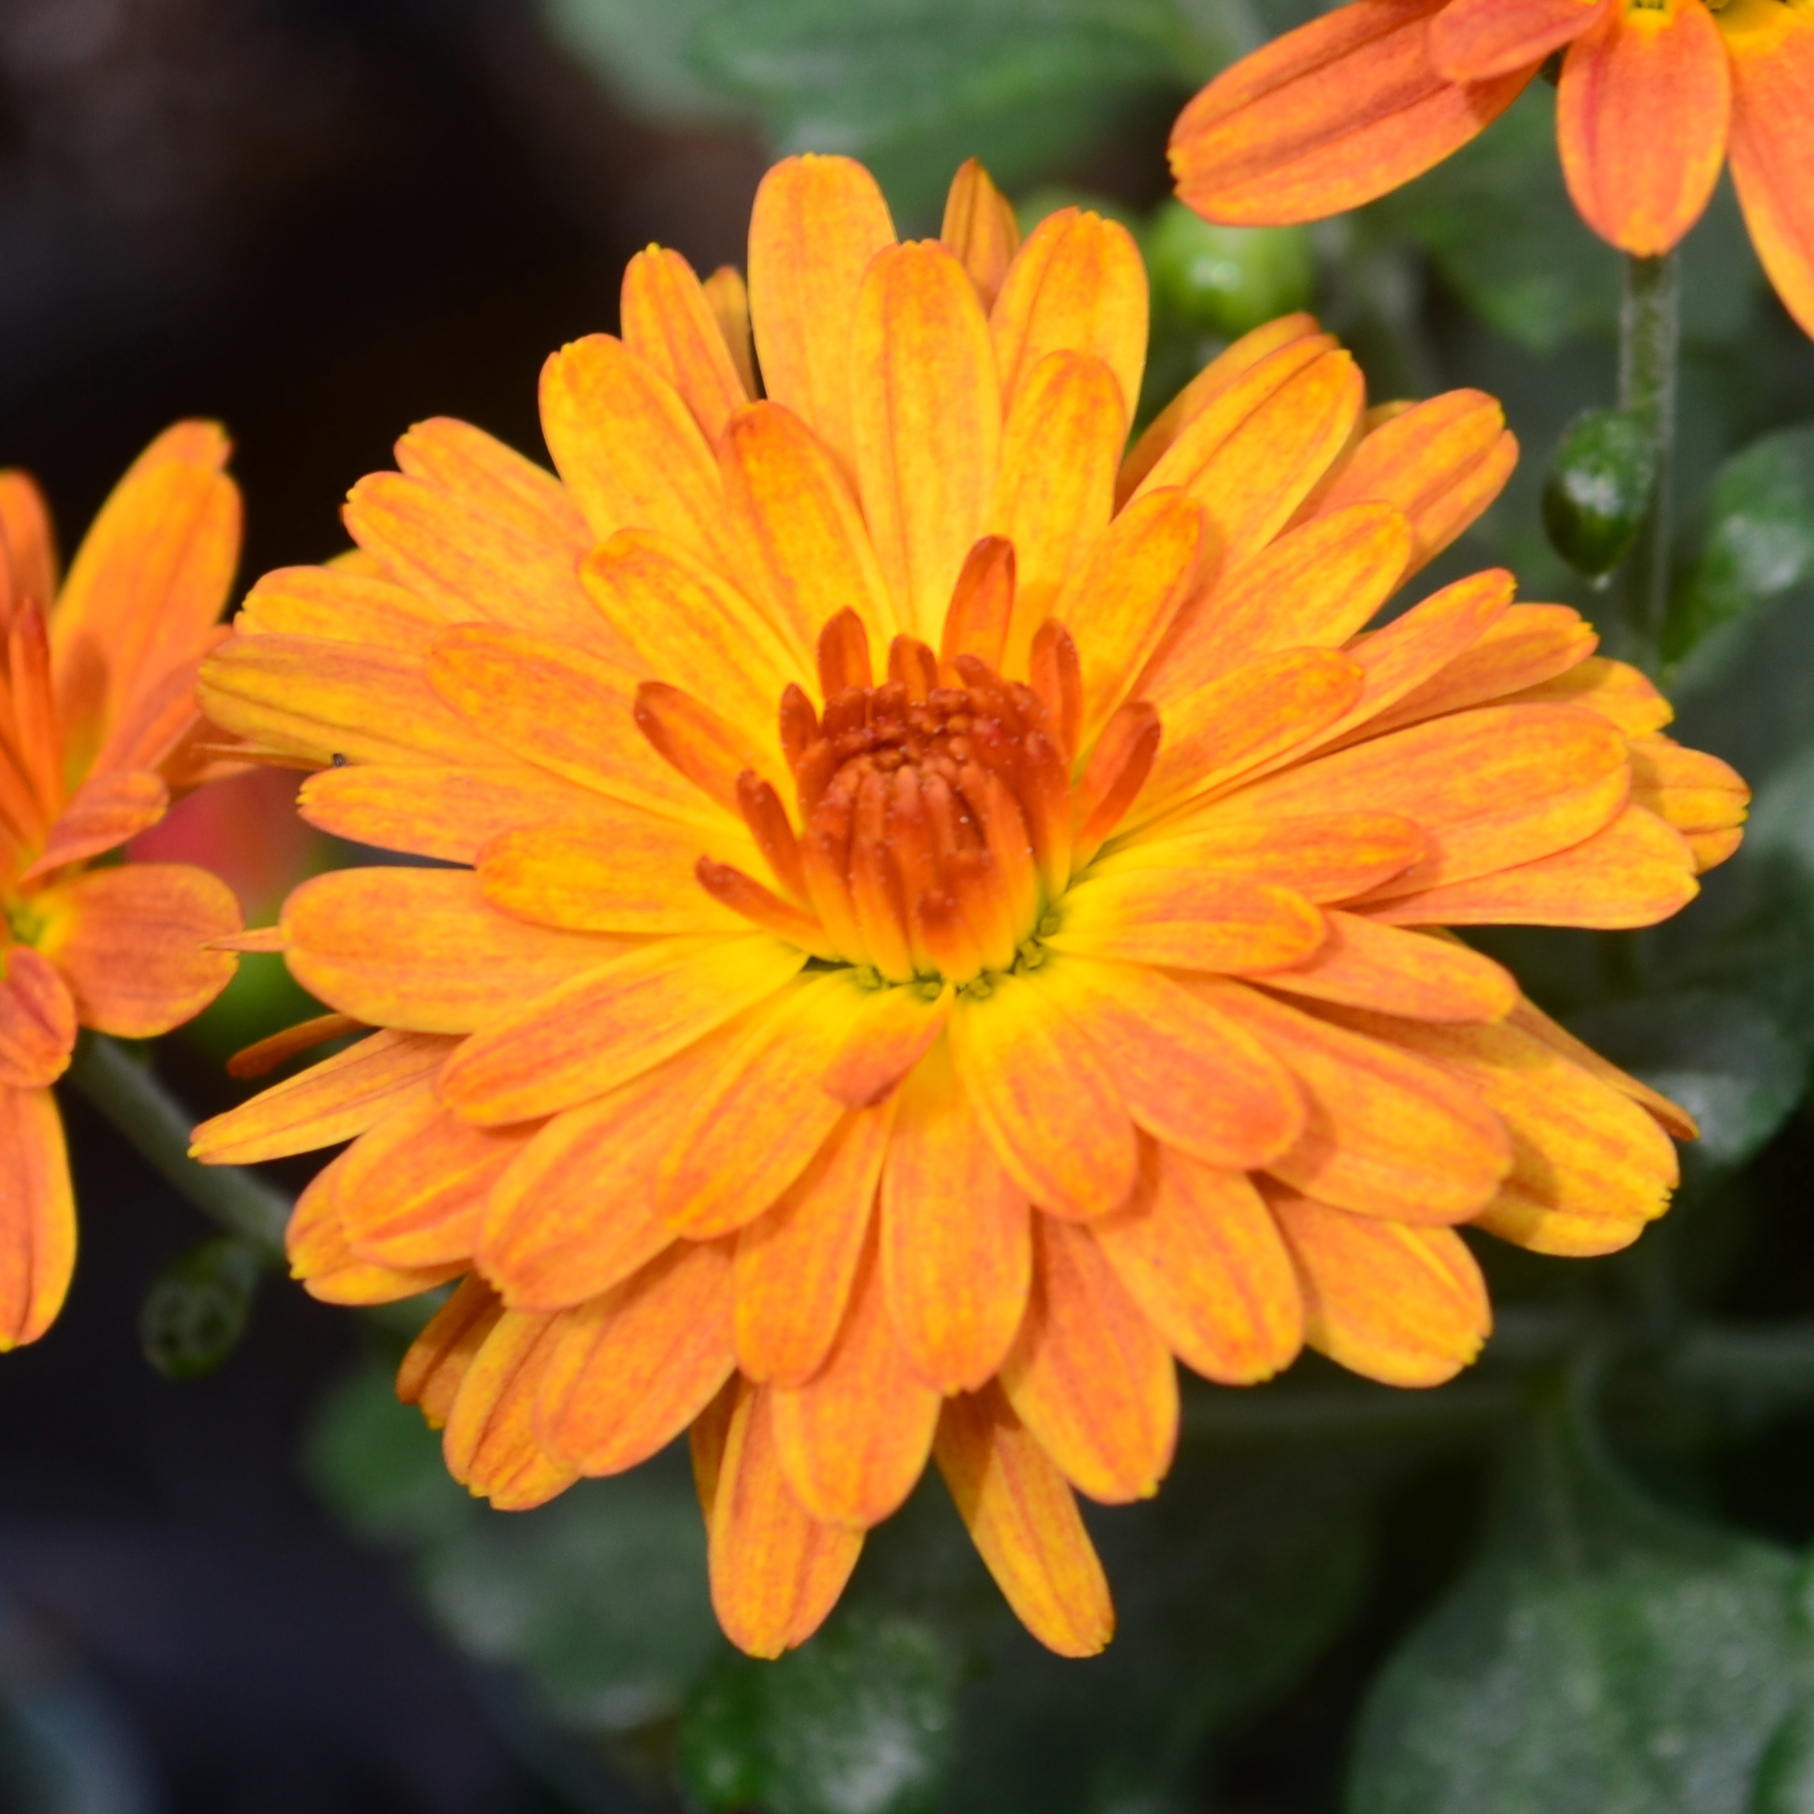 Chrysanthemum Urano 'Orange' - Mum from Hillcrest Nursery